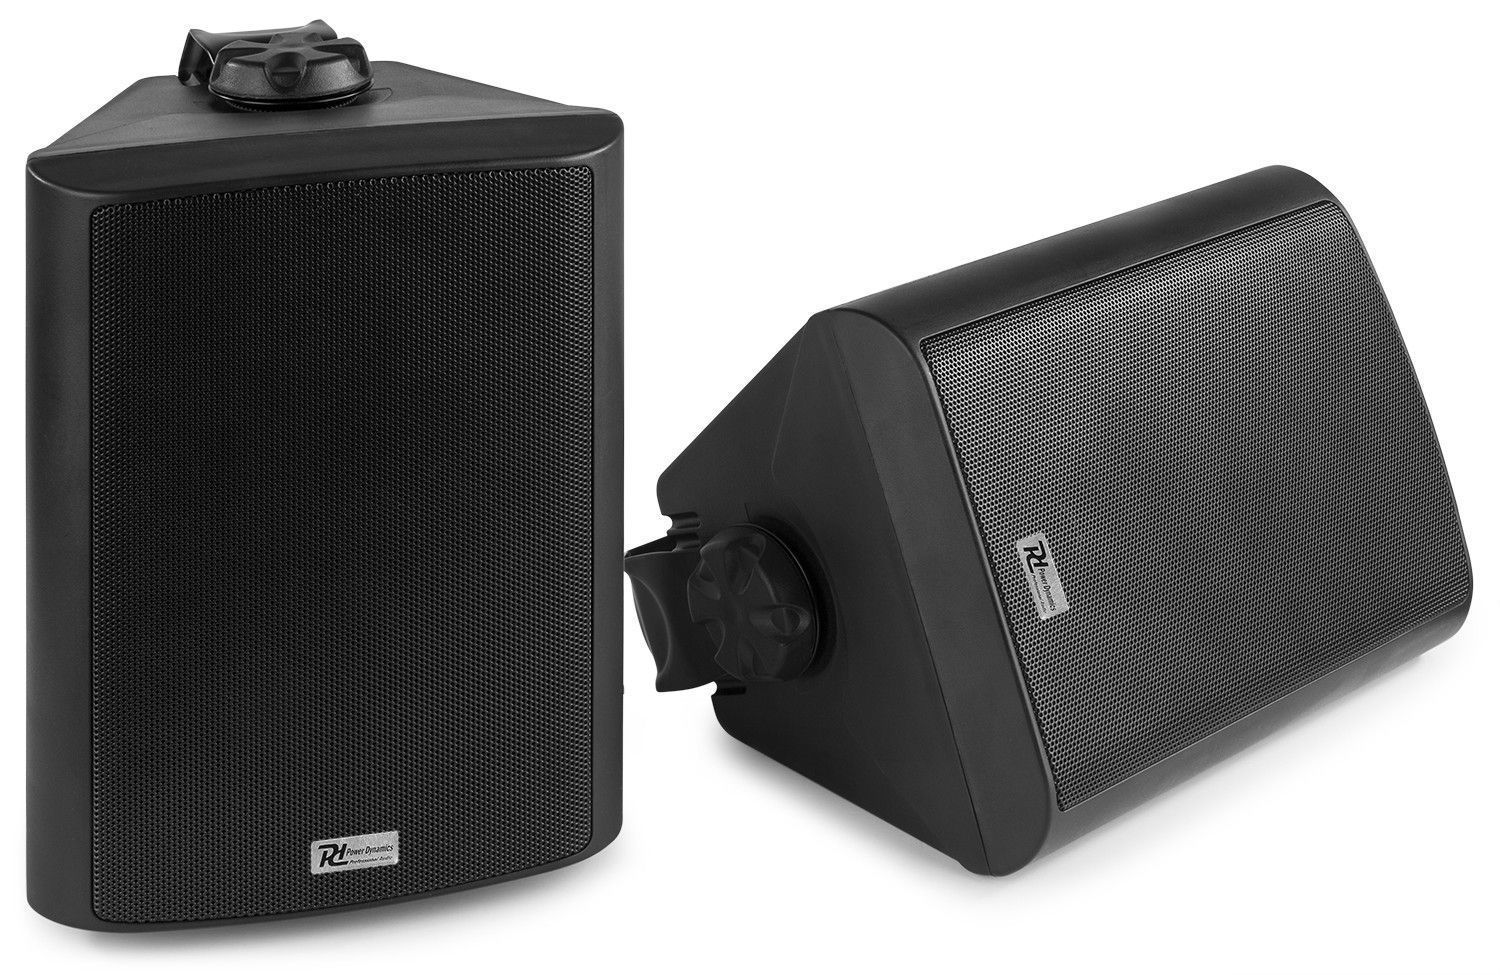 Retourdeal - Power Dynamics BGB50 zwarte Bluetooth speakerset voor